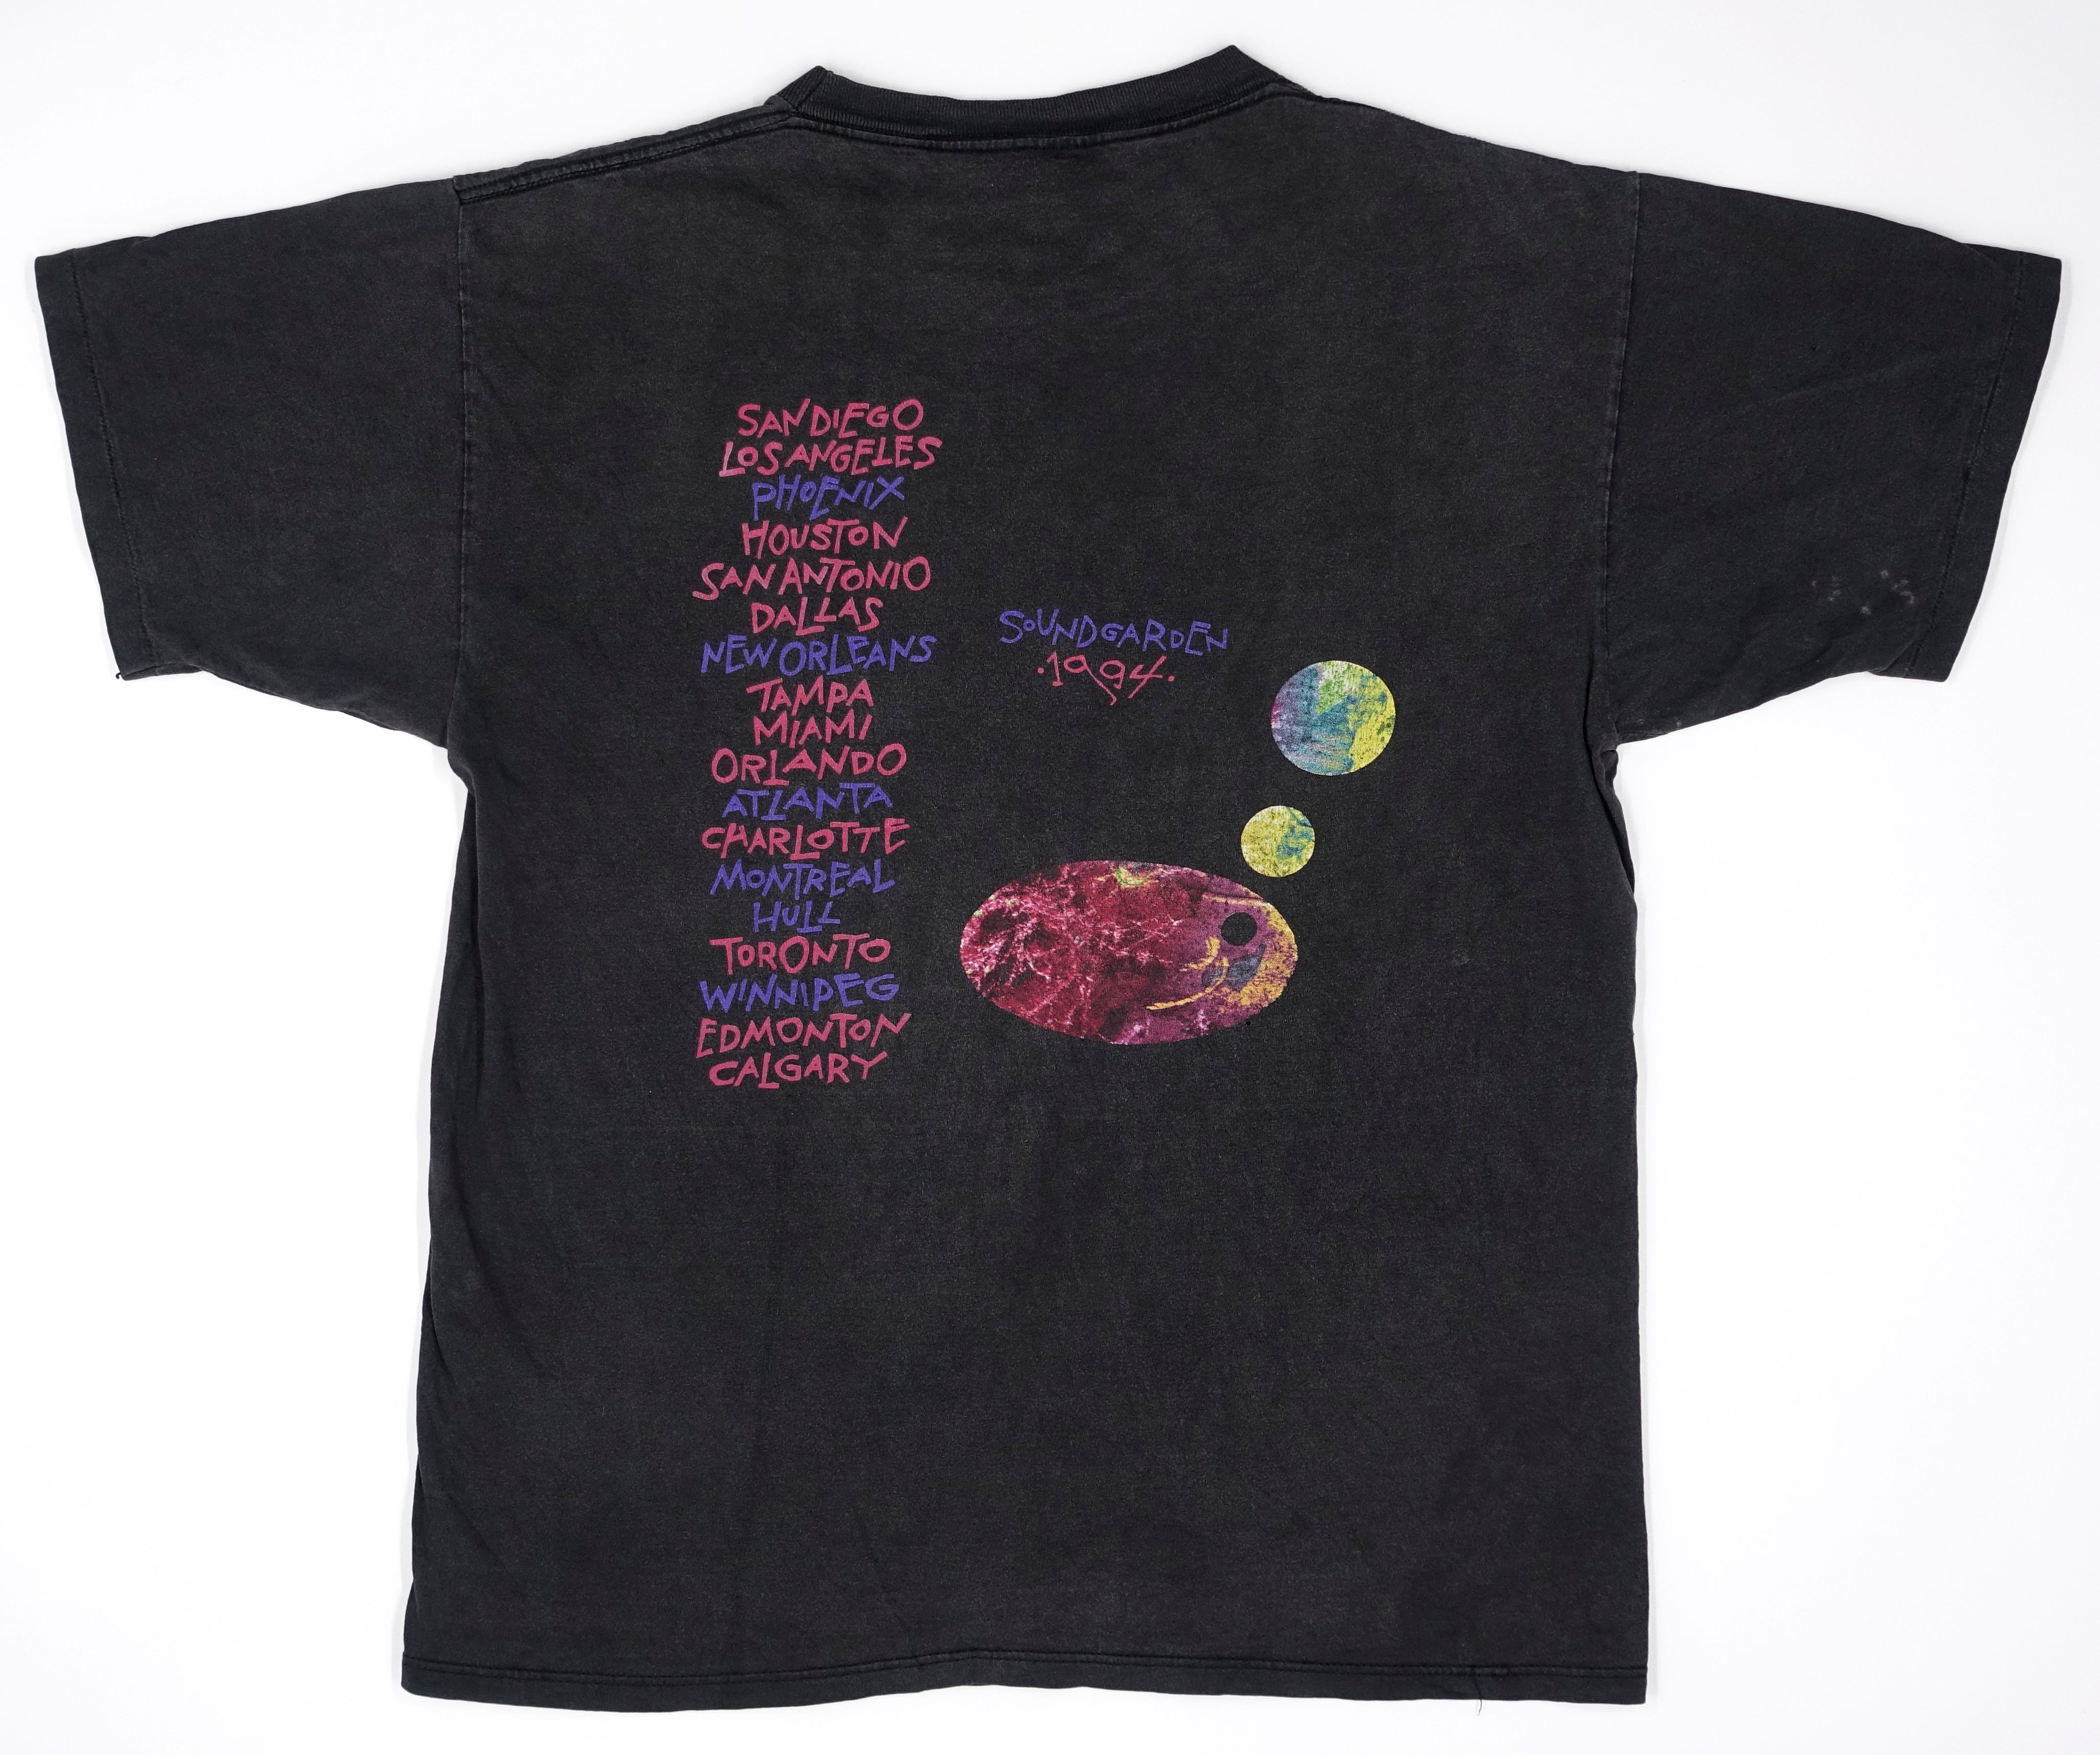 Soundgarden – Superunknown 1994 North American Tour Shirt Size XL